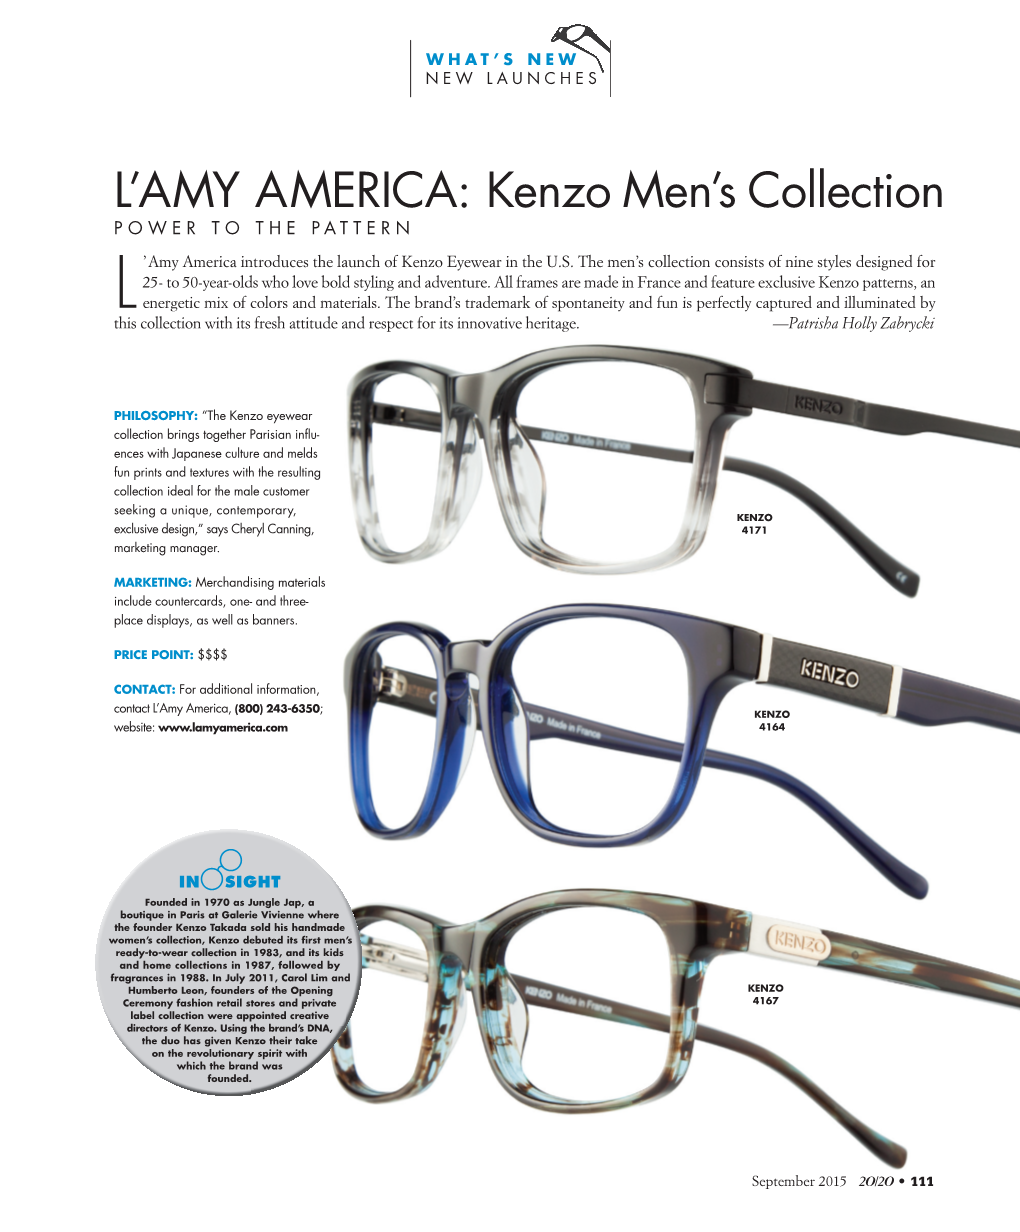 Kenzo Men's Collection